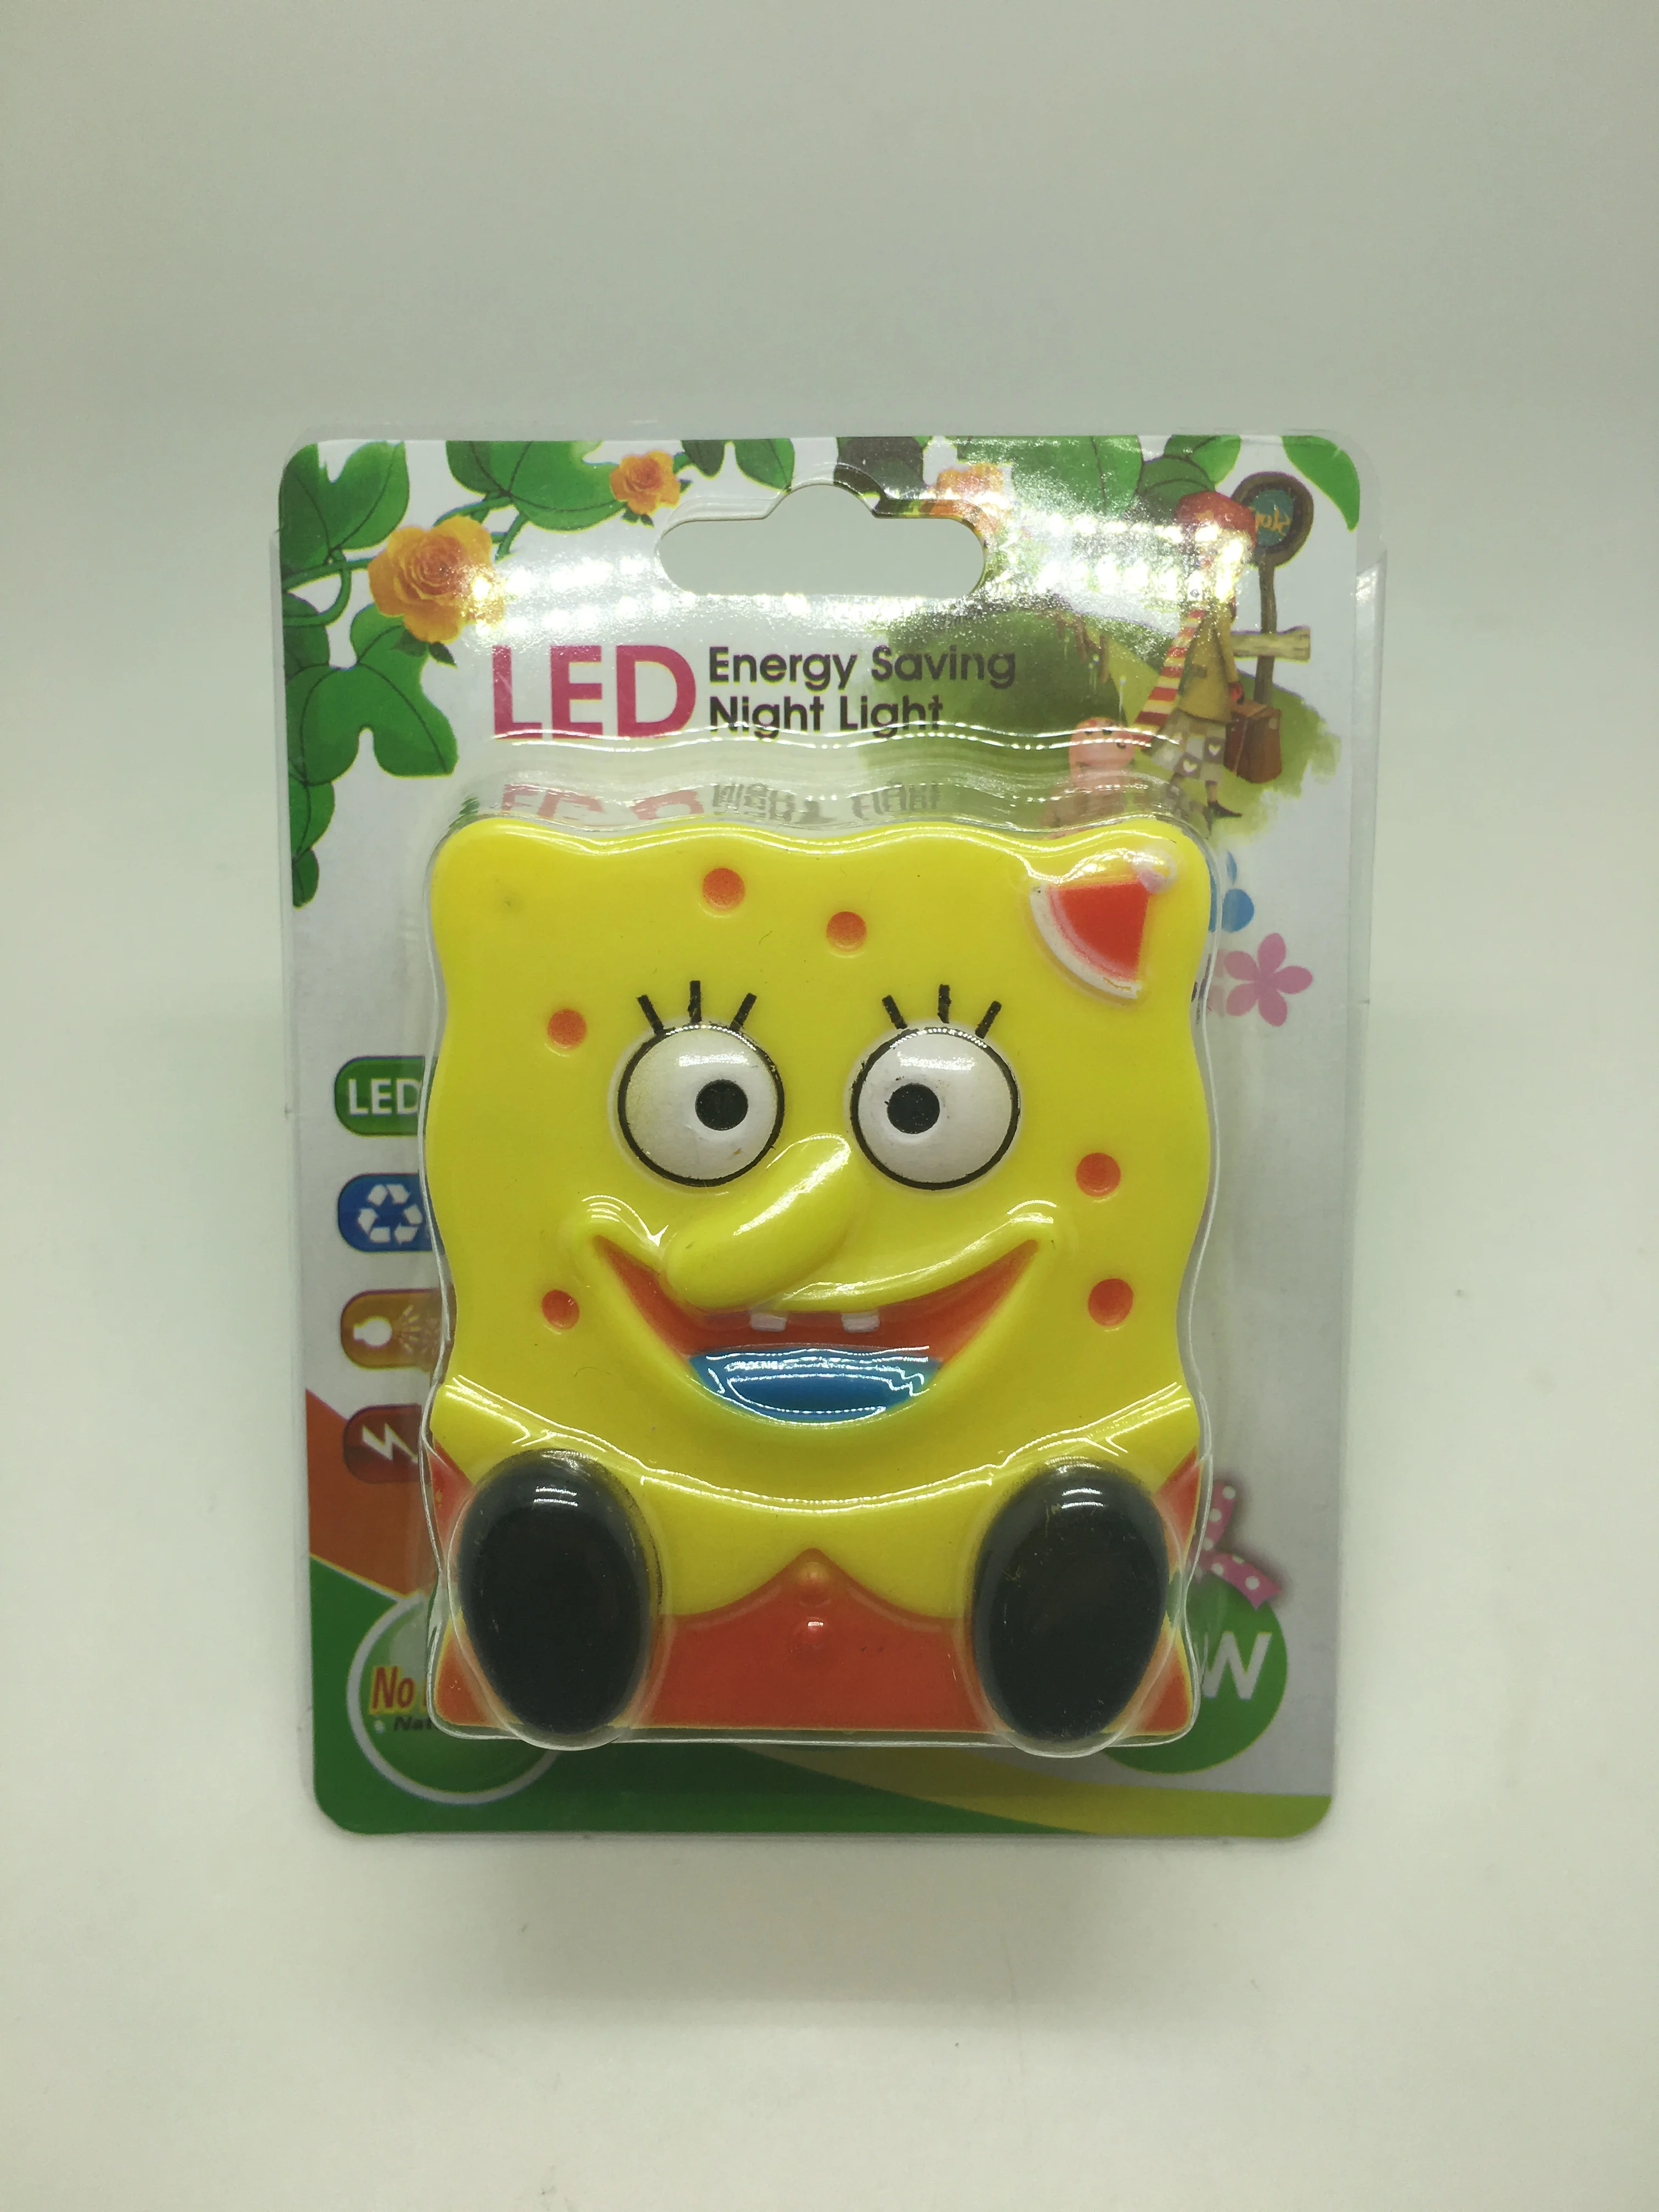 OEM W064 Spongebob squarepants shape 4 SMD mini switch plug in night light 0.6W AC 110V 220V